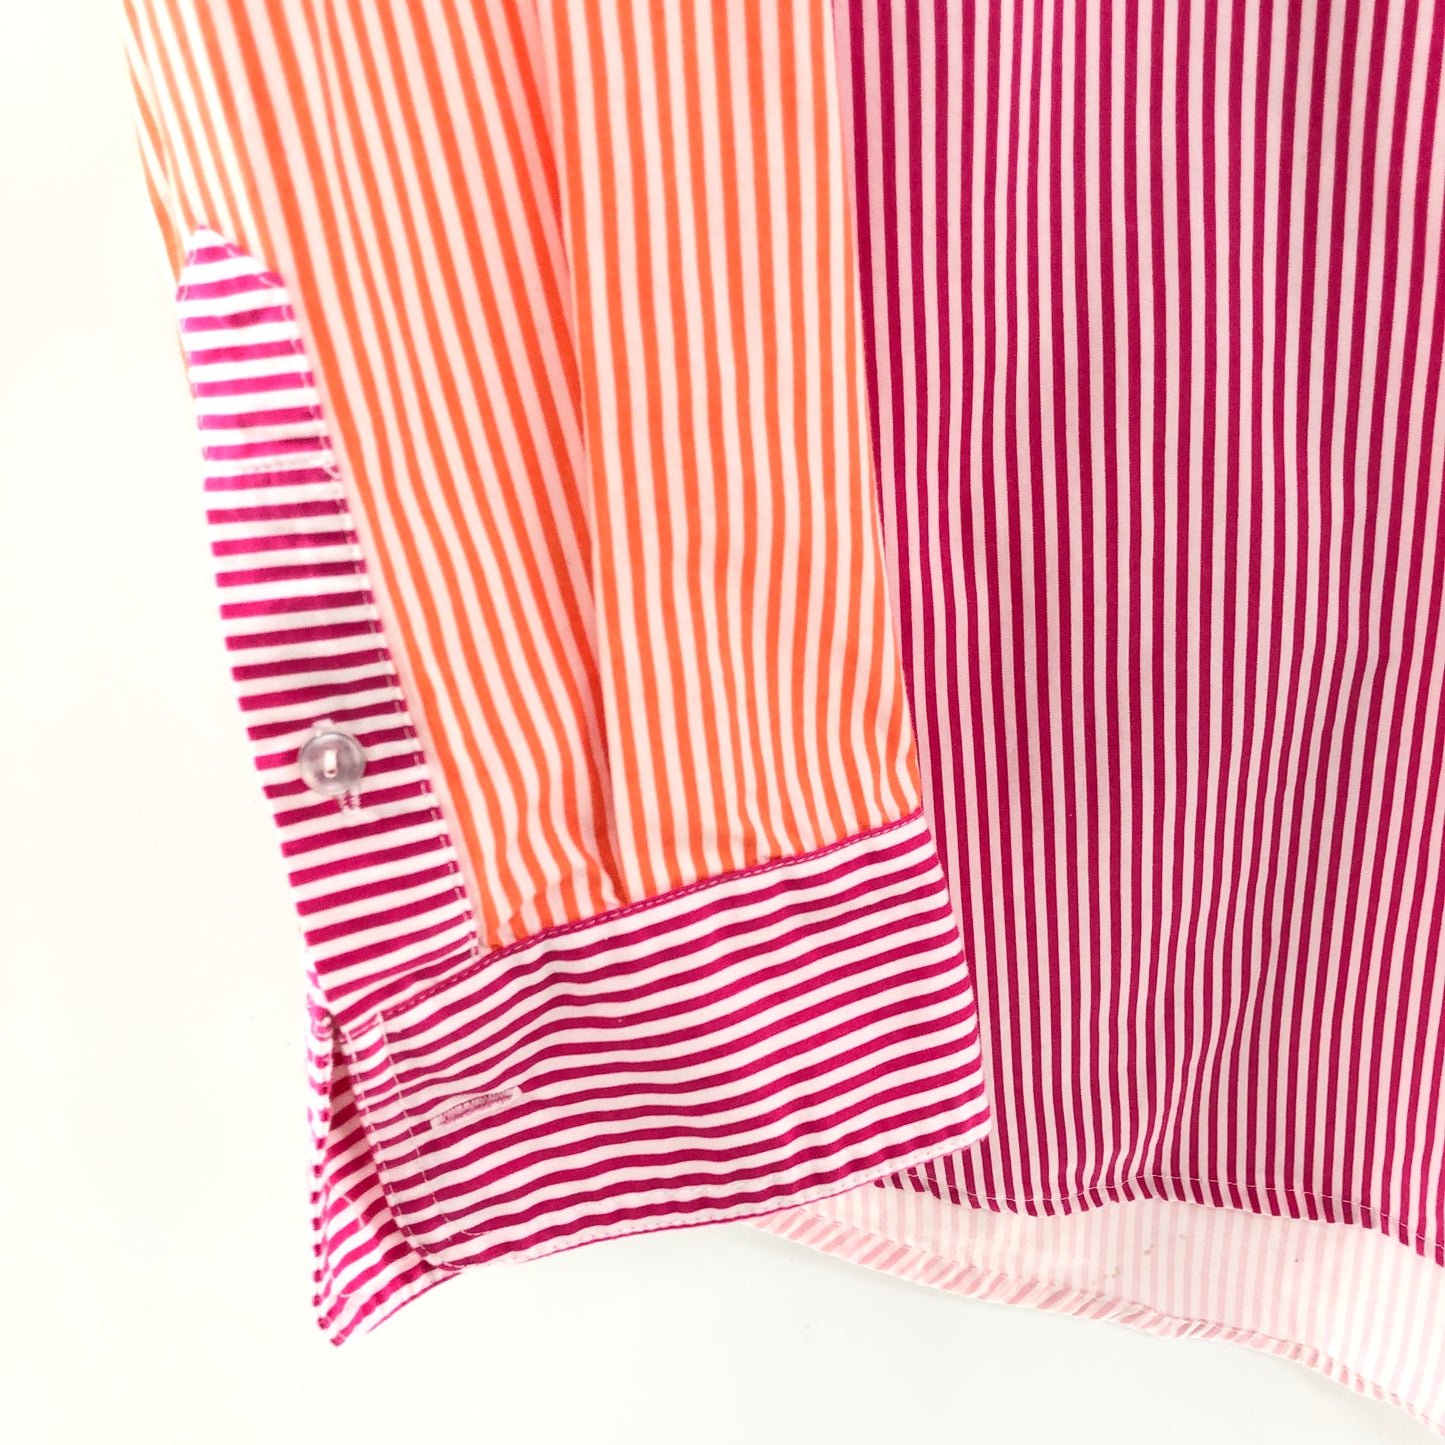 Solid & Striped The Oxford Tunic in Sorbet Stripe